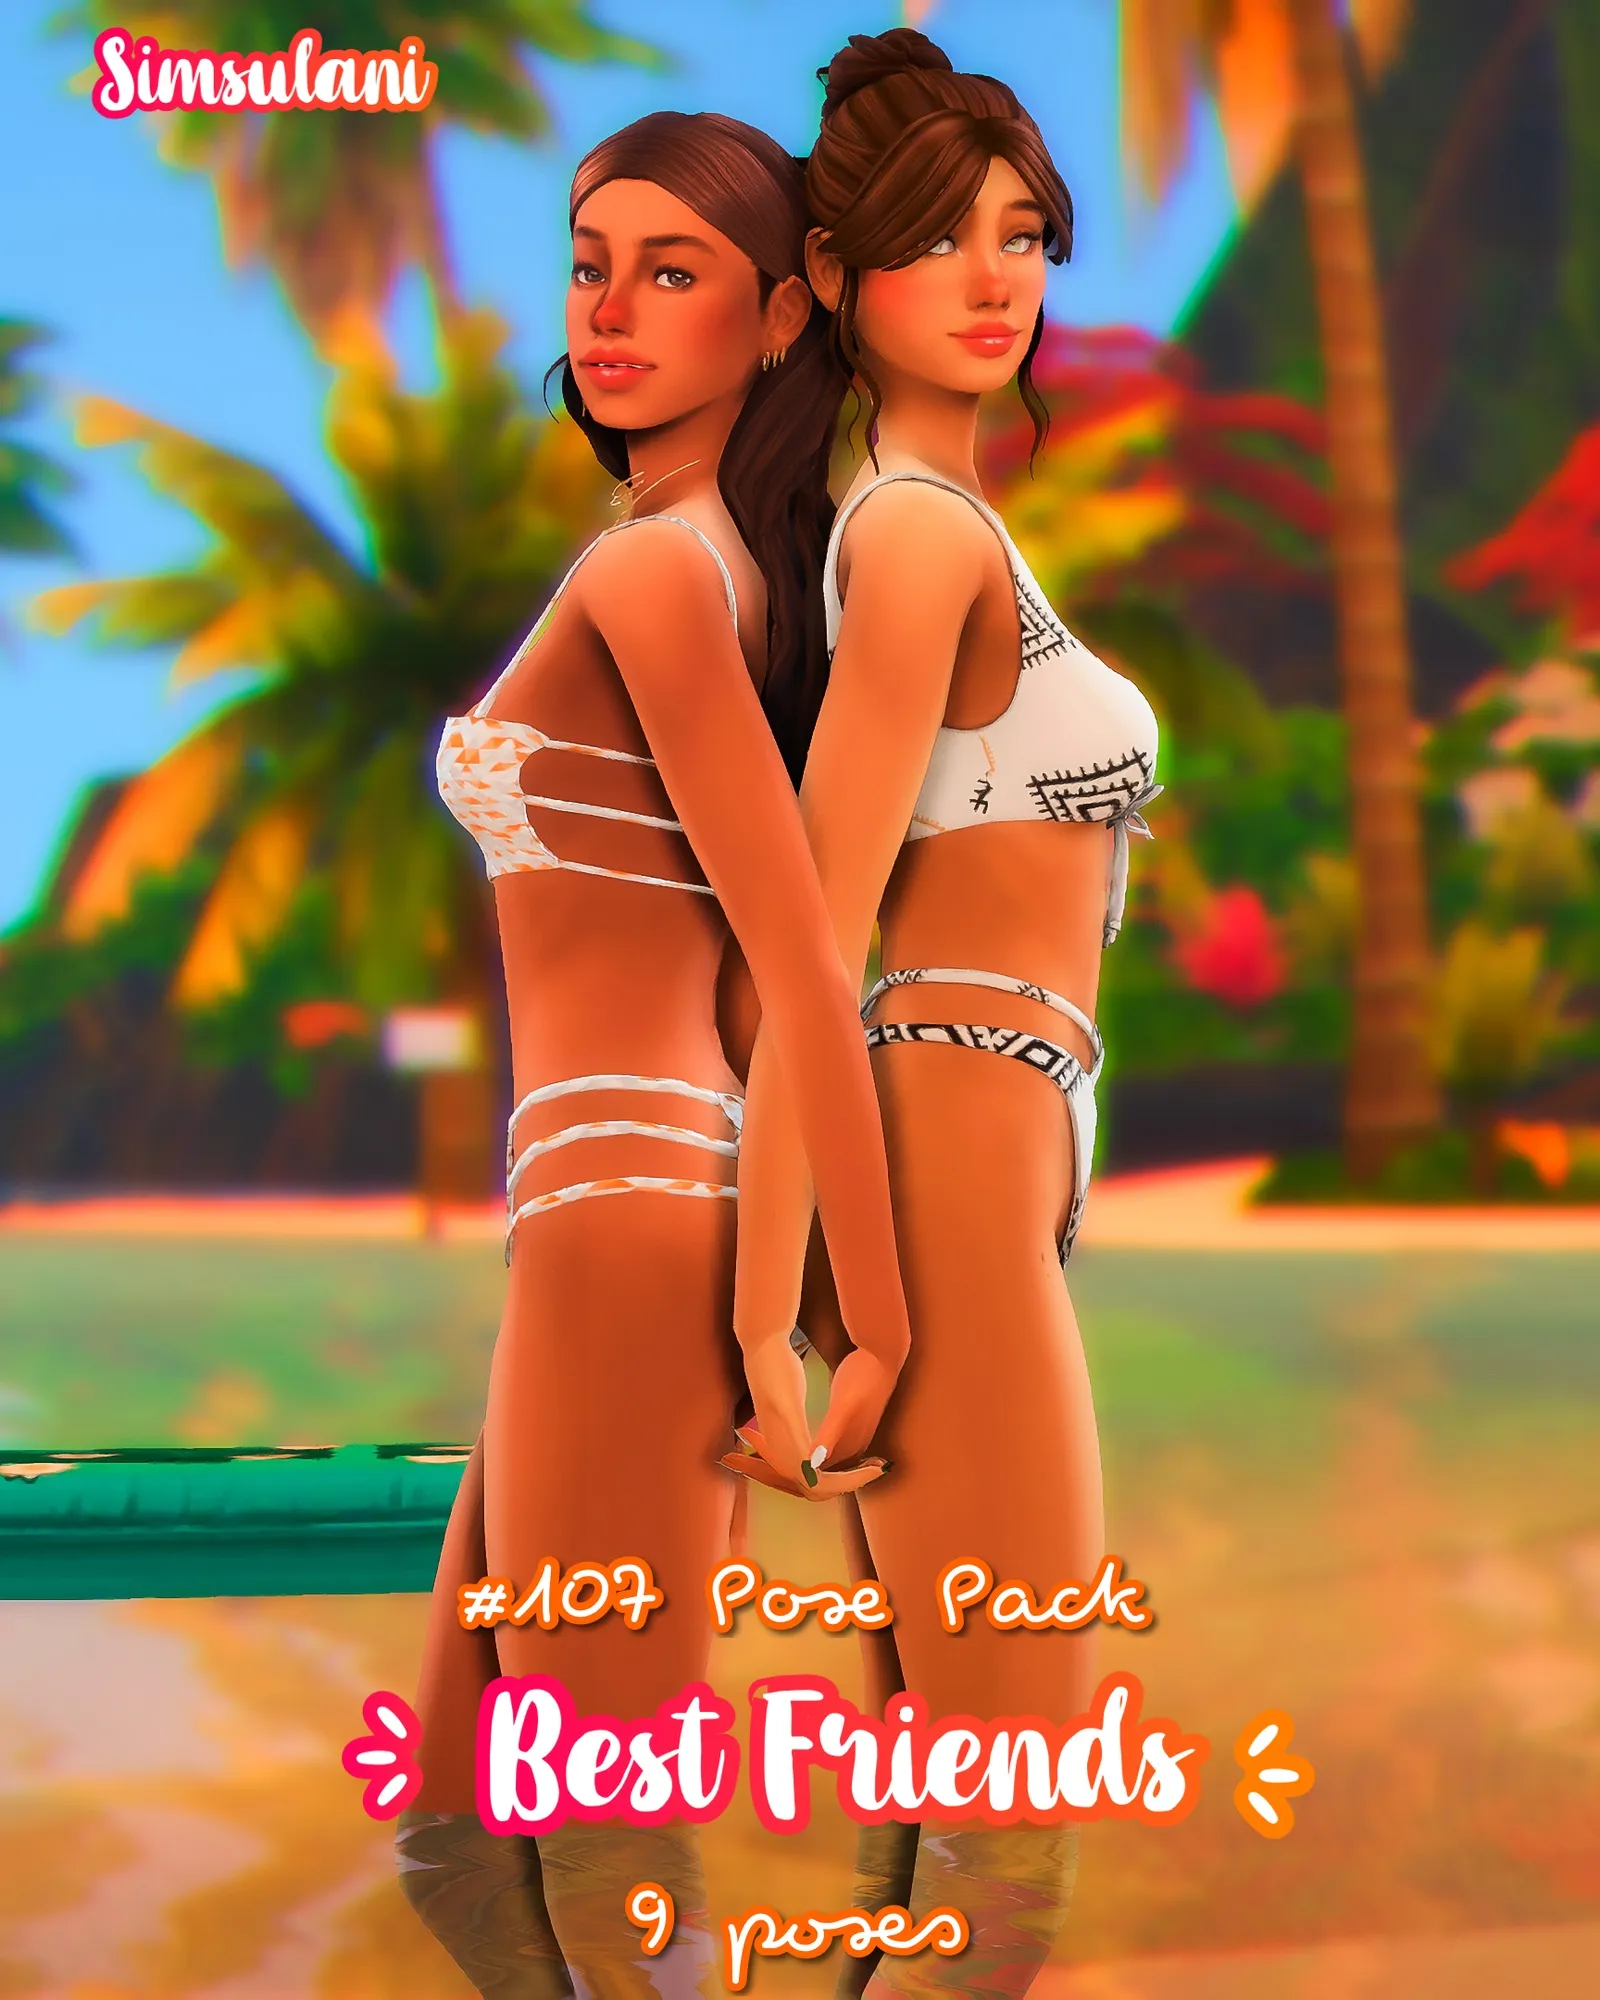 #107 Pose Pack : "Best Friends" ??